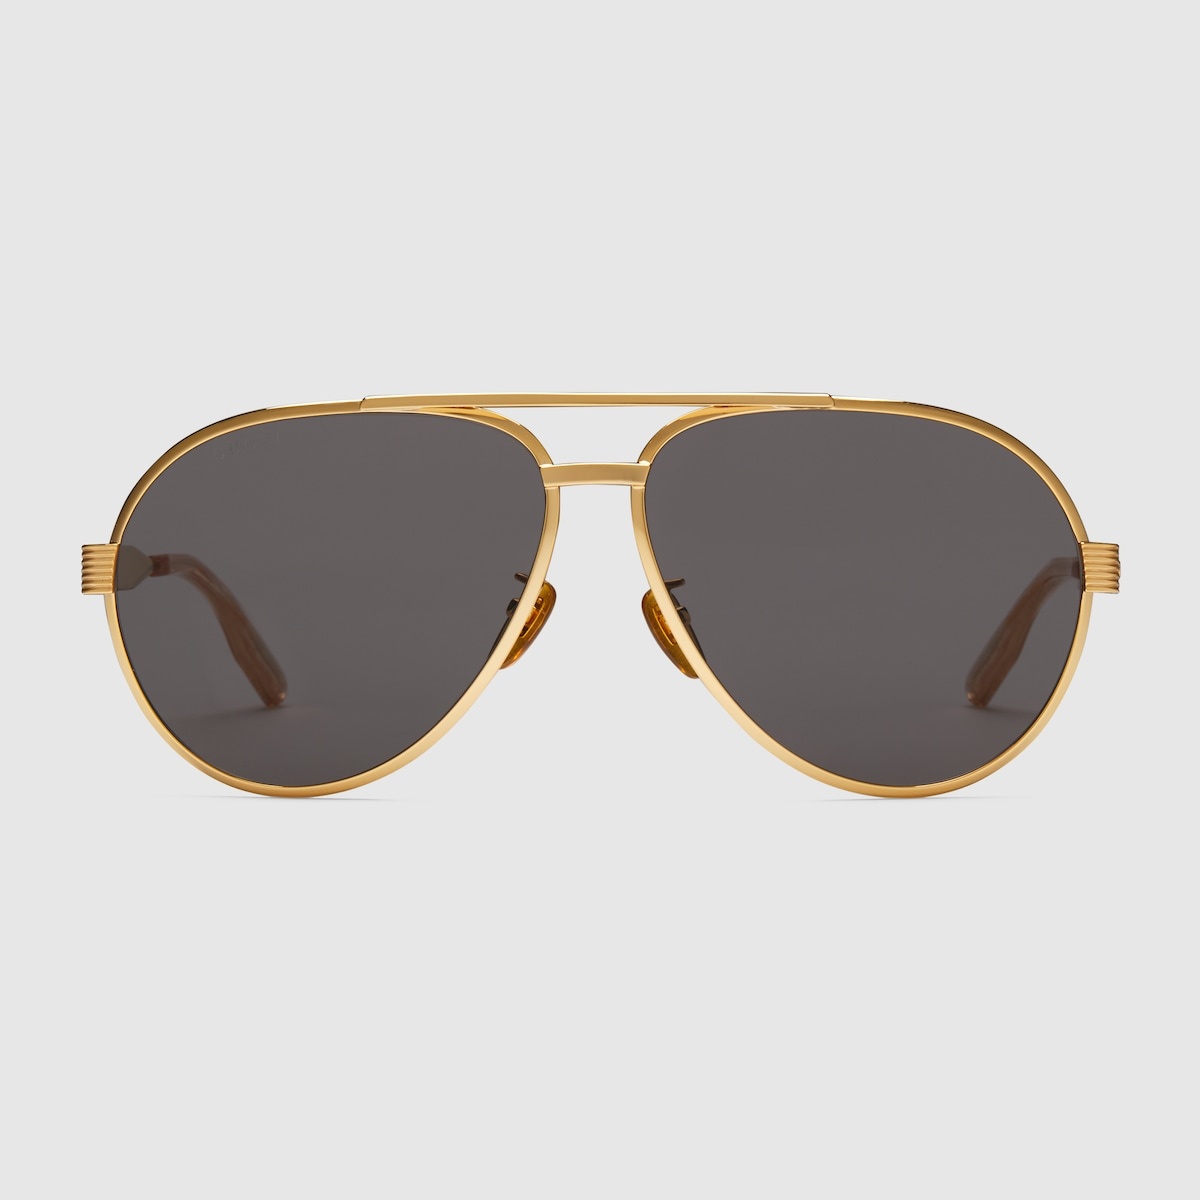 Aviator frame sunglasses - 1